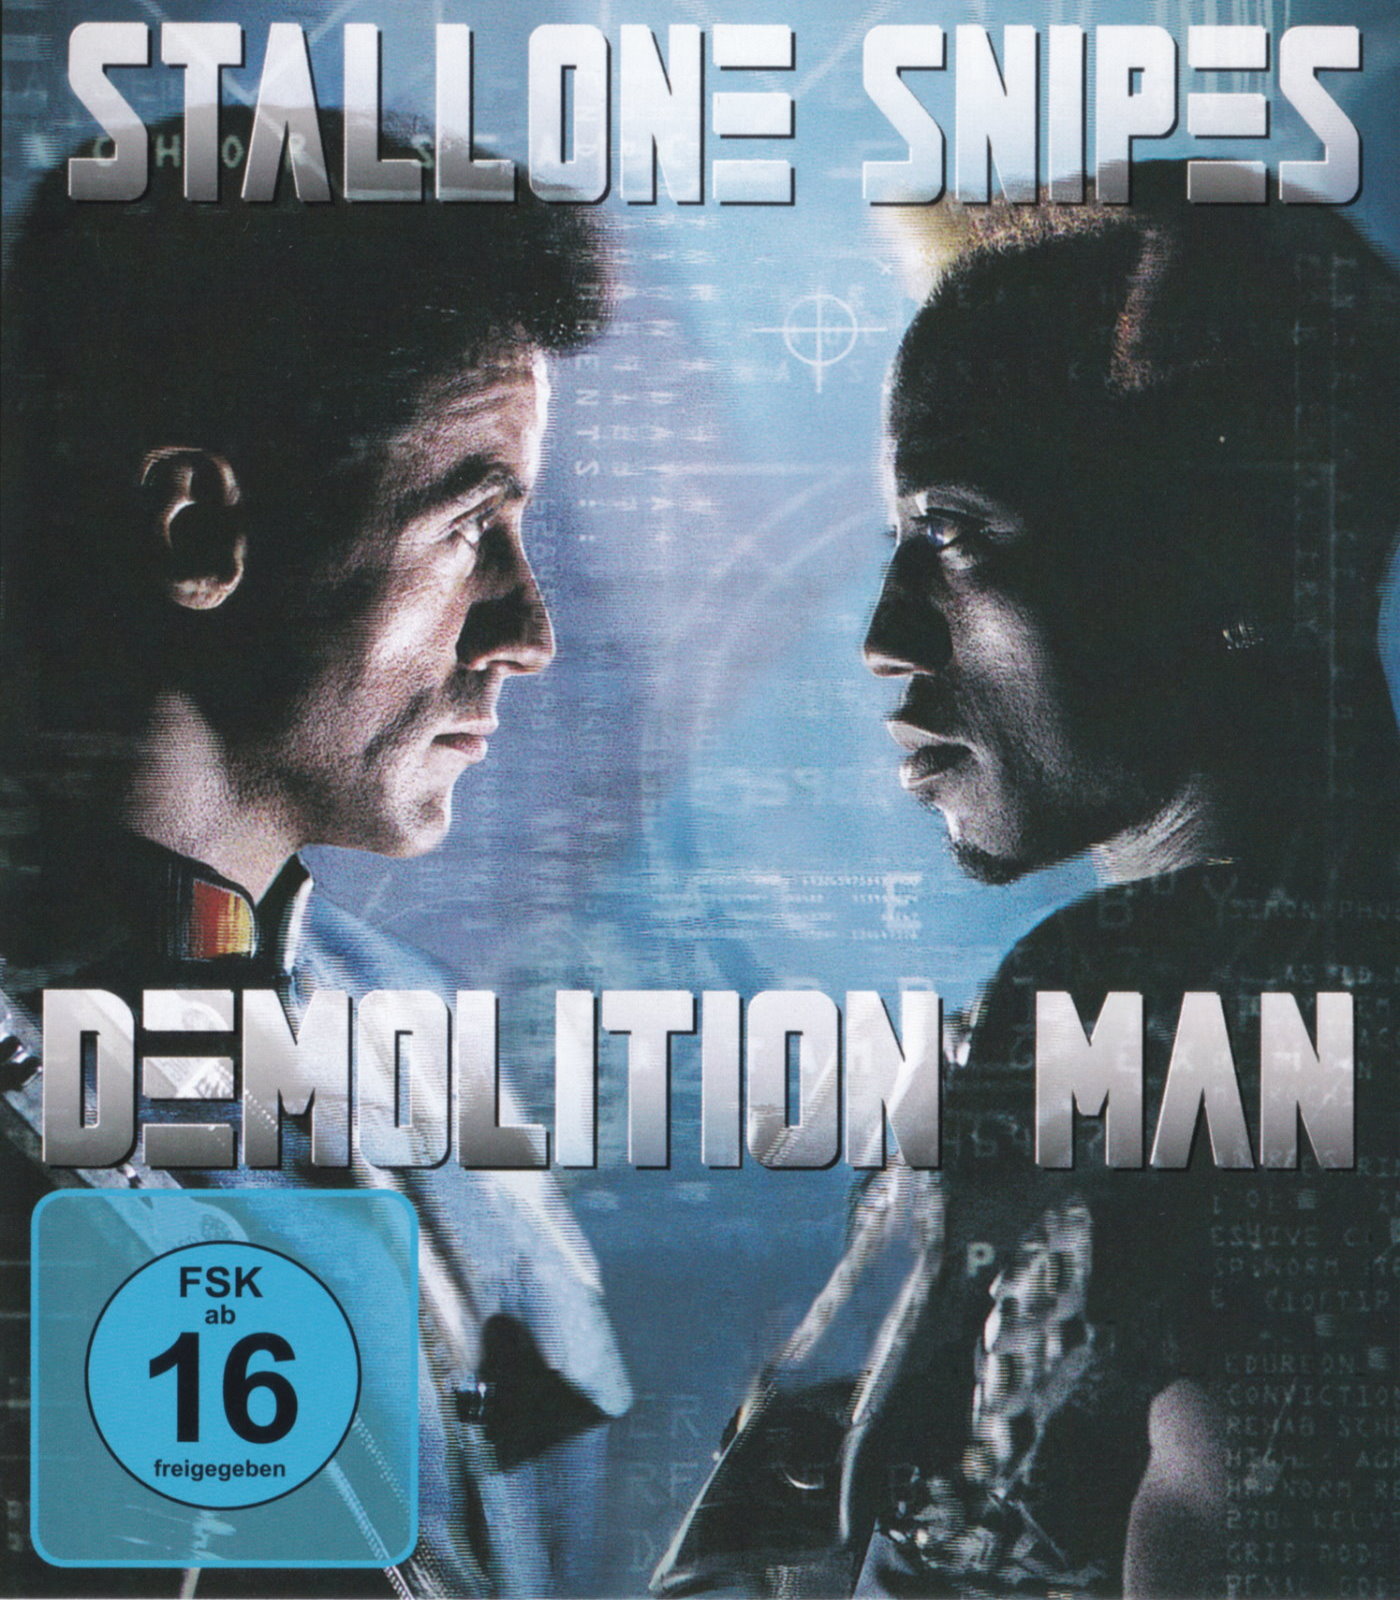 Cover - Demolition Man.jpg